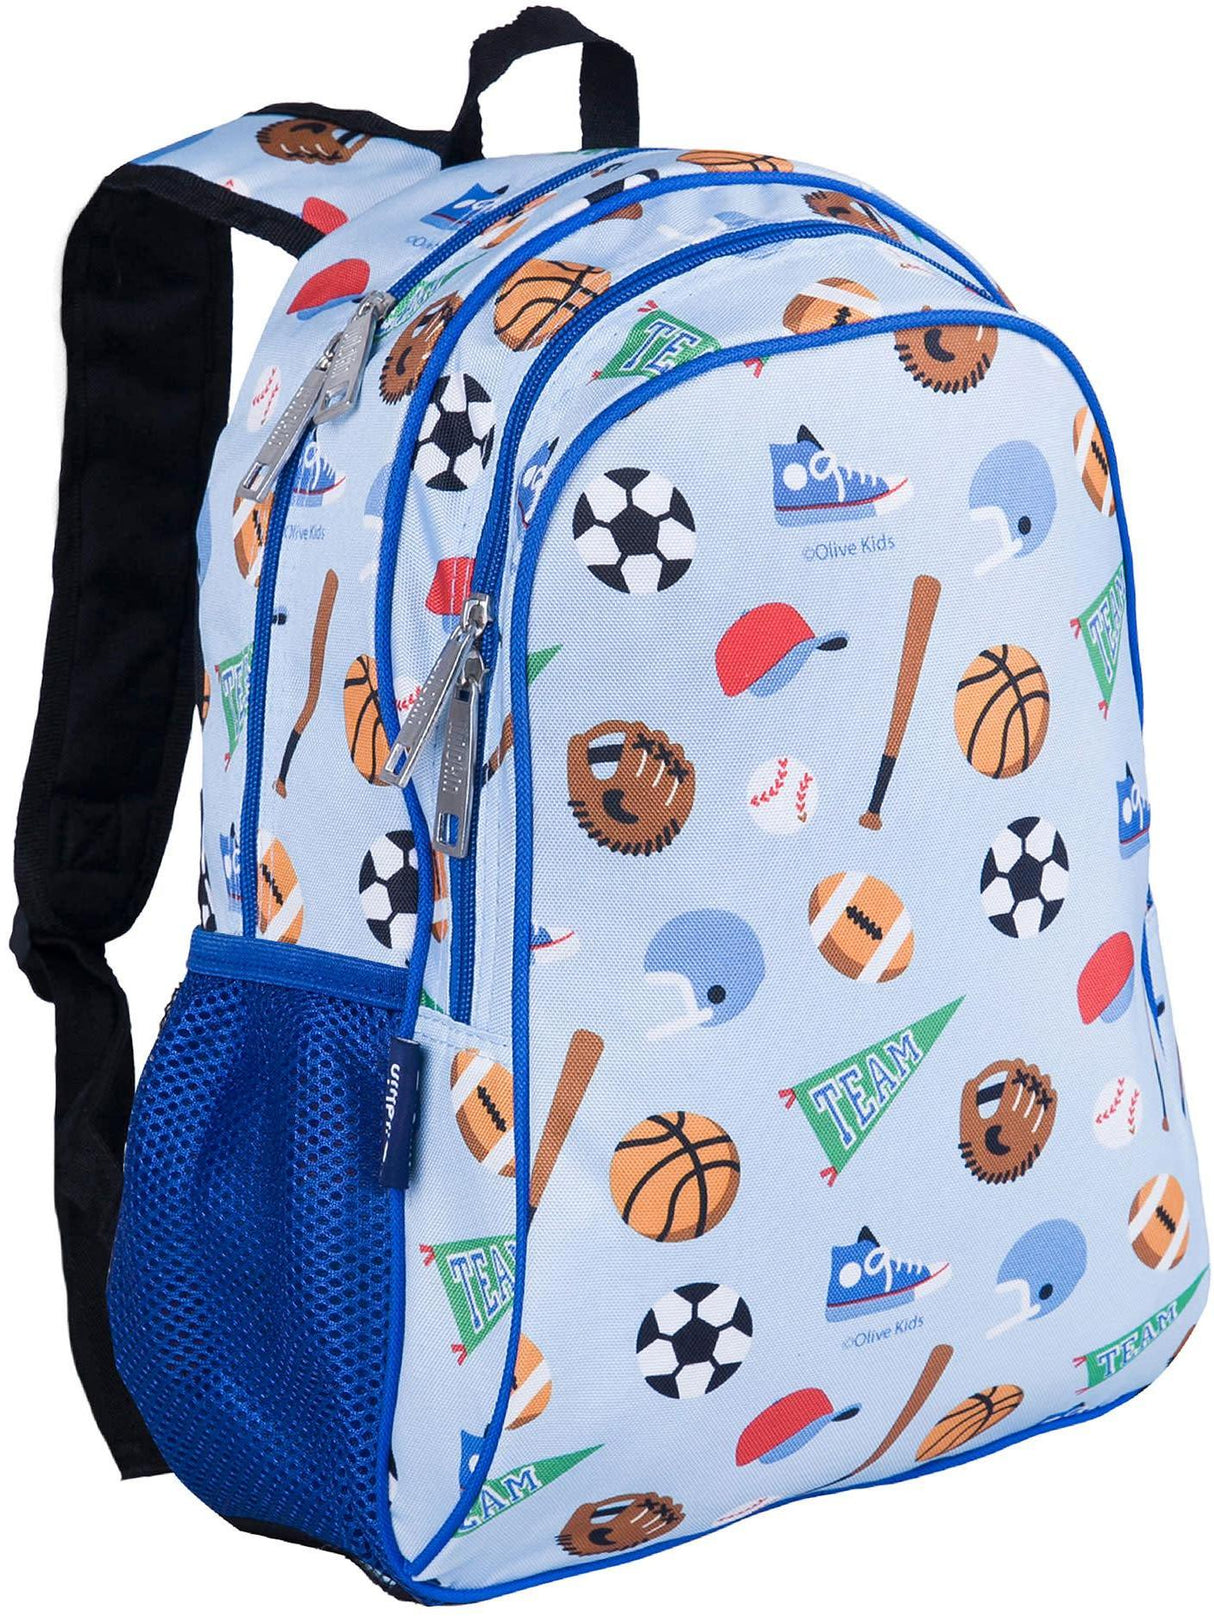 Wildkin Sports Backpack - 14406